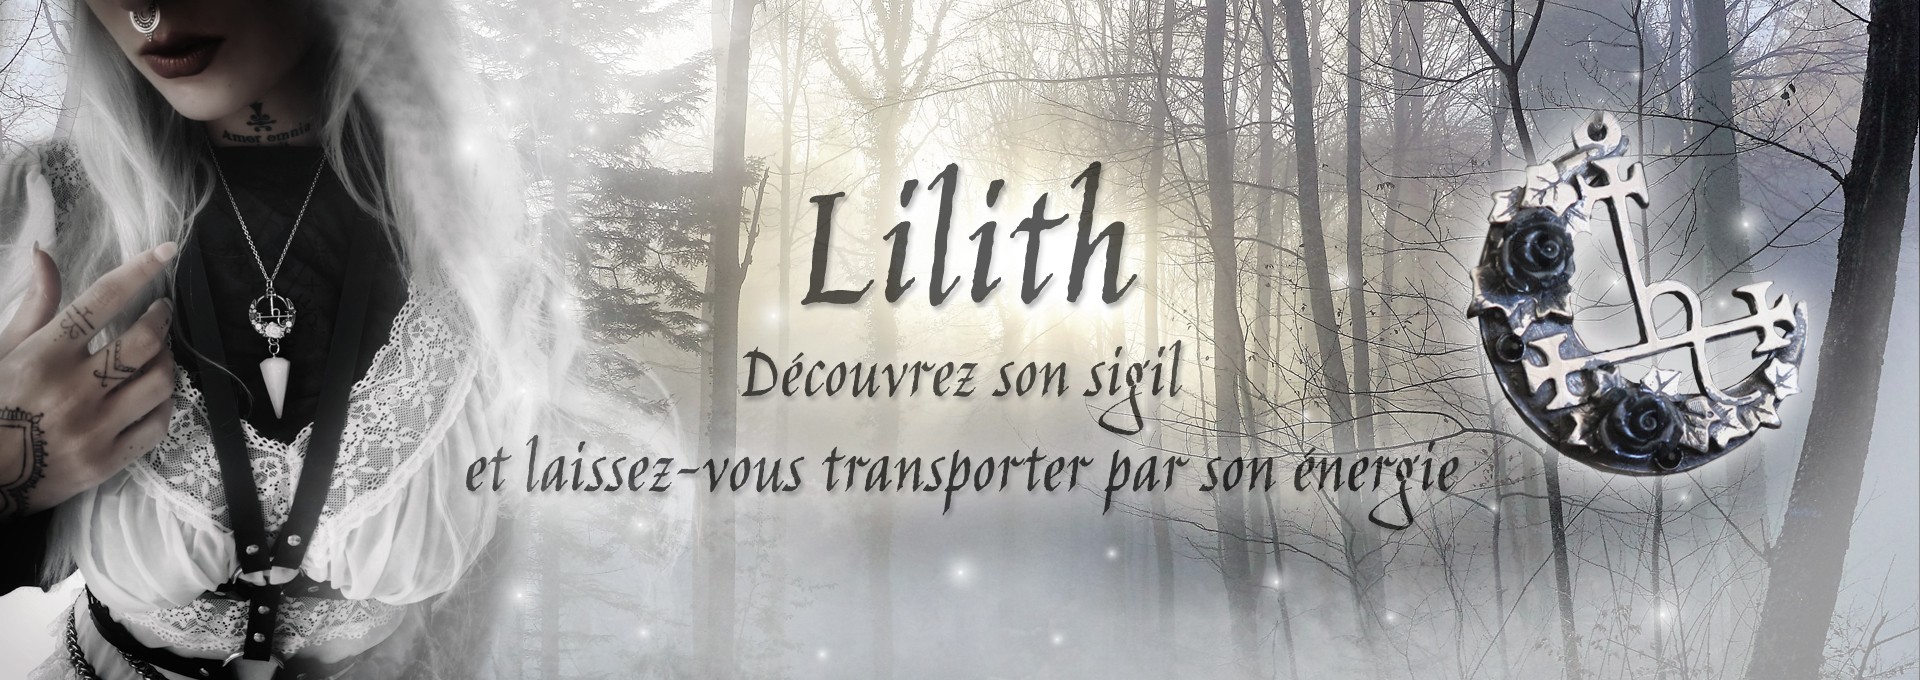 Sigil de Lilith